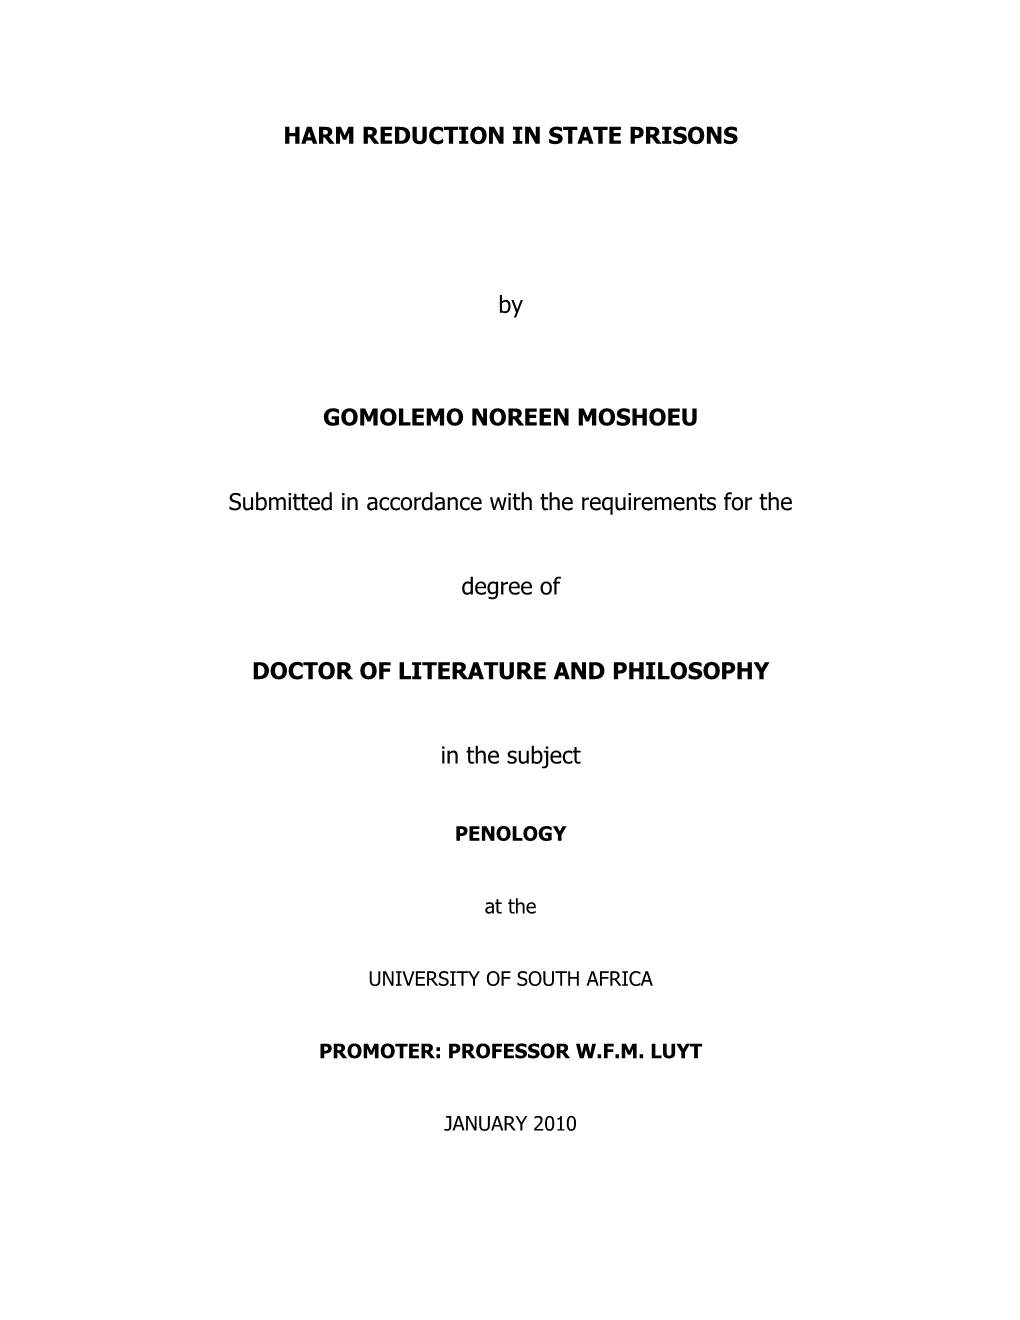 Organisation of the Dissertation